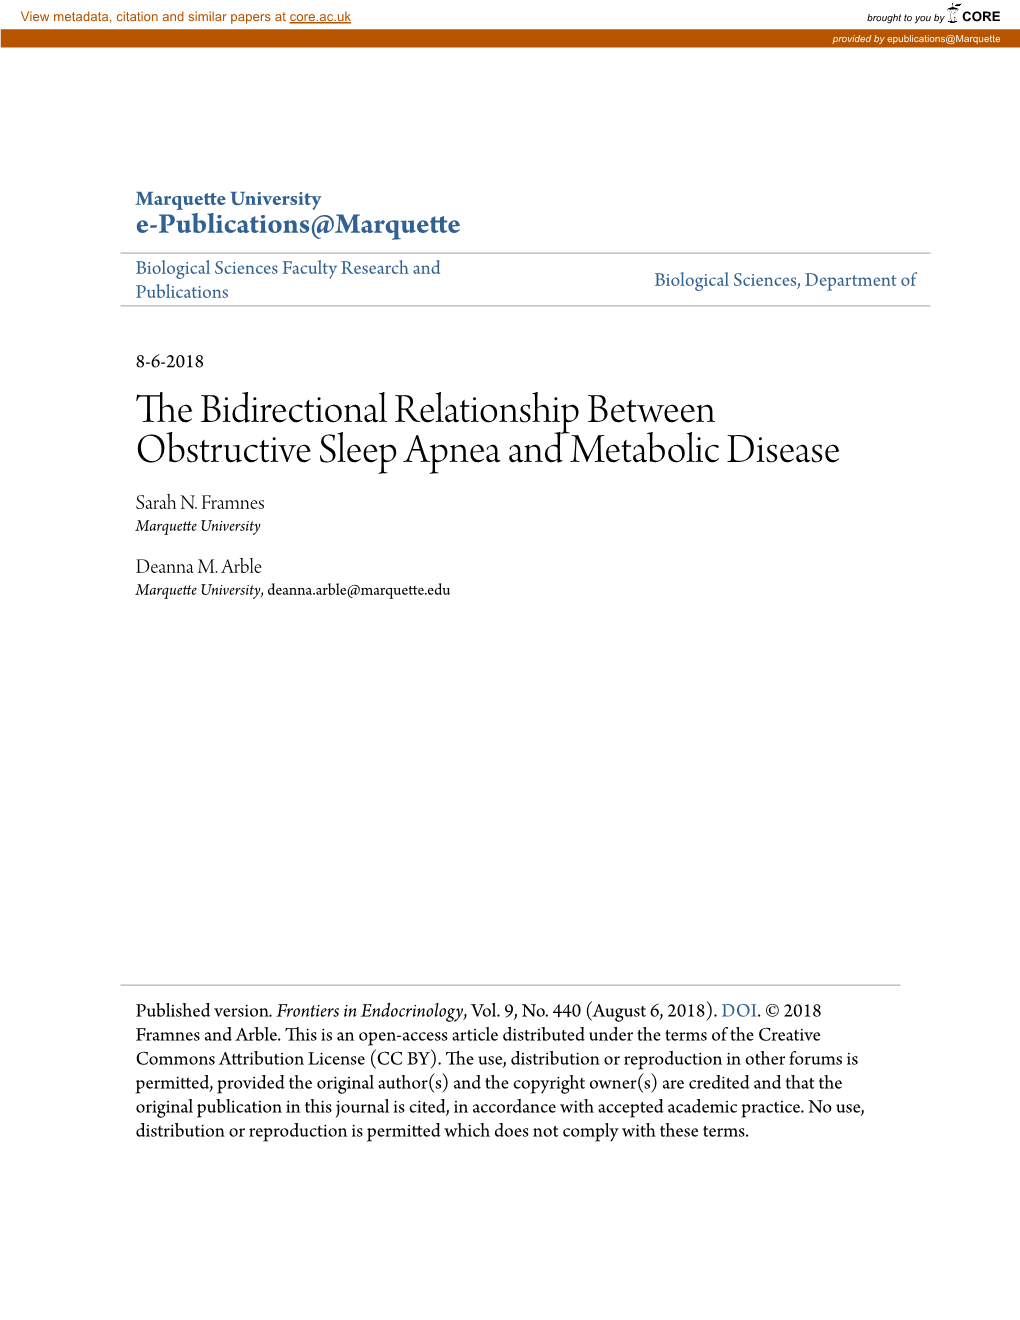 The Bidirectional Relationship Between Obstructive Sleep Apnea and Metabolic Disease